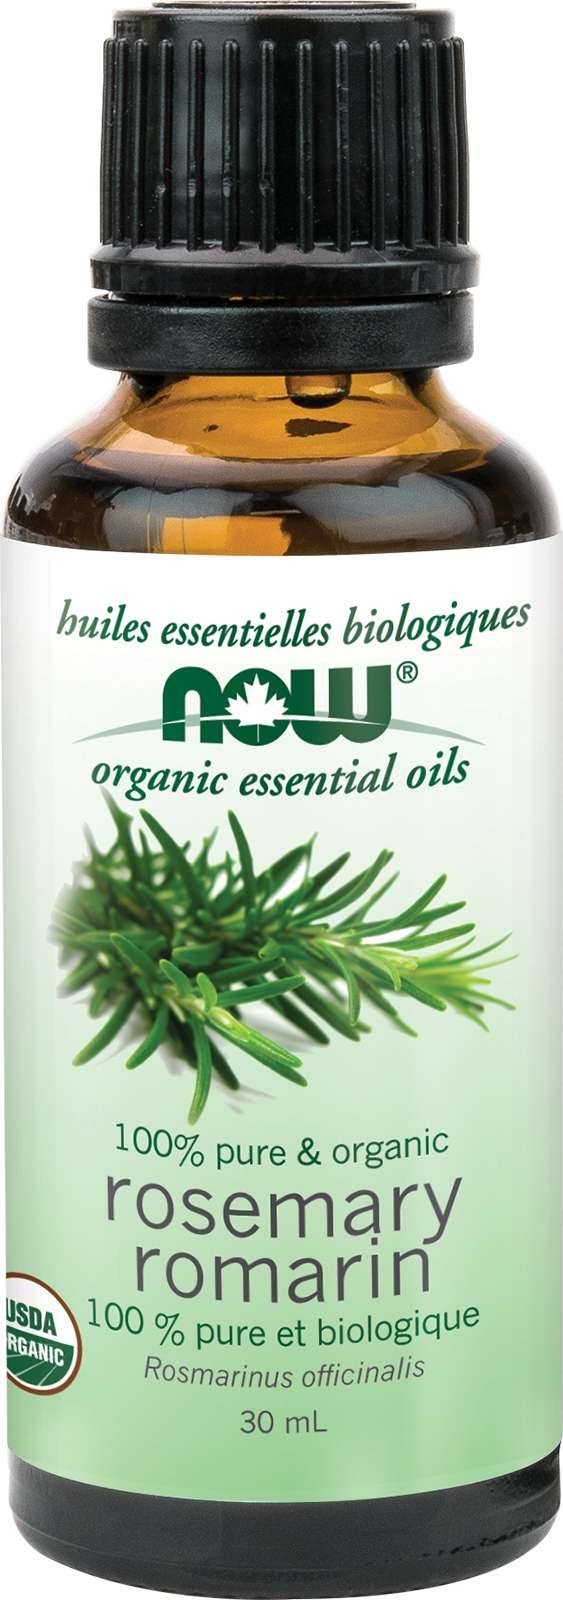 NOW - Rosemary Oil 30 ml Organic